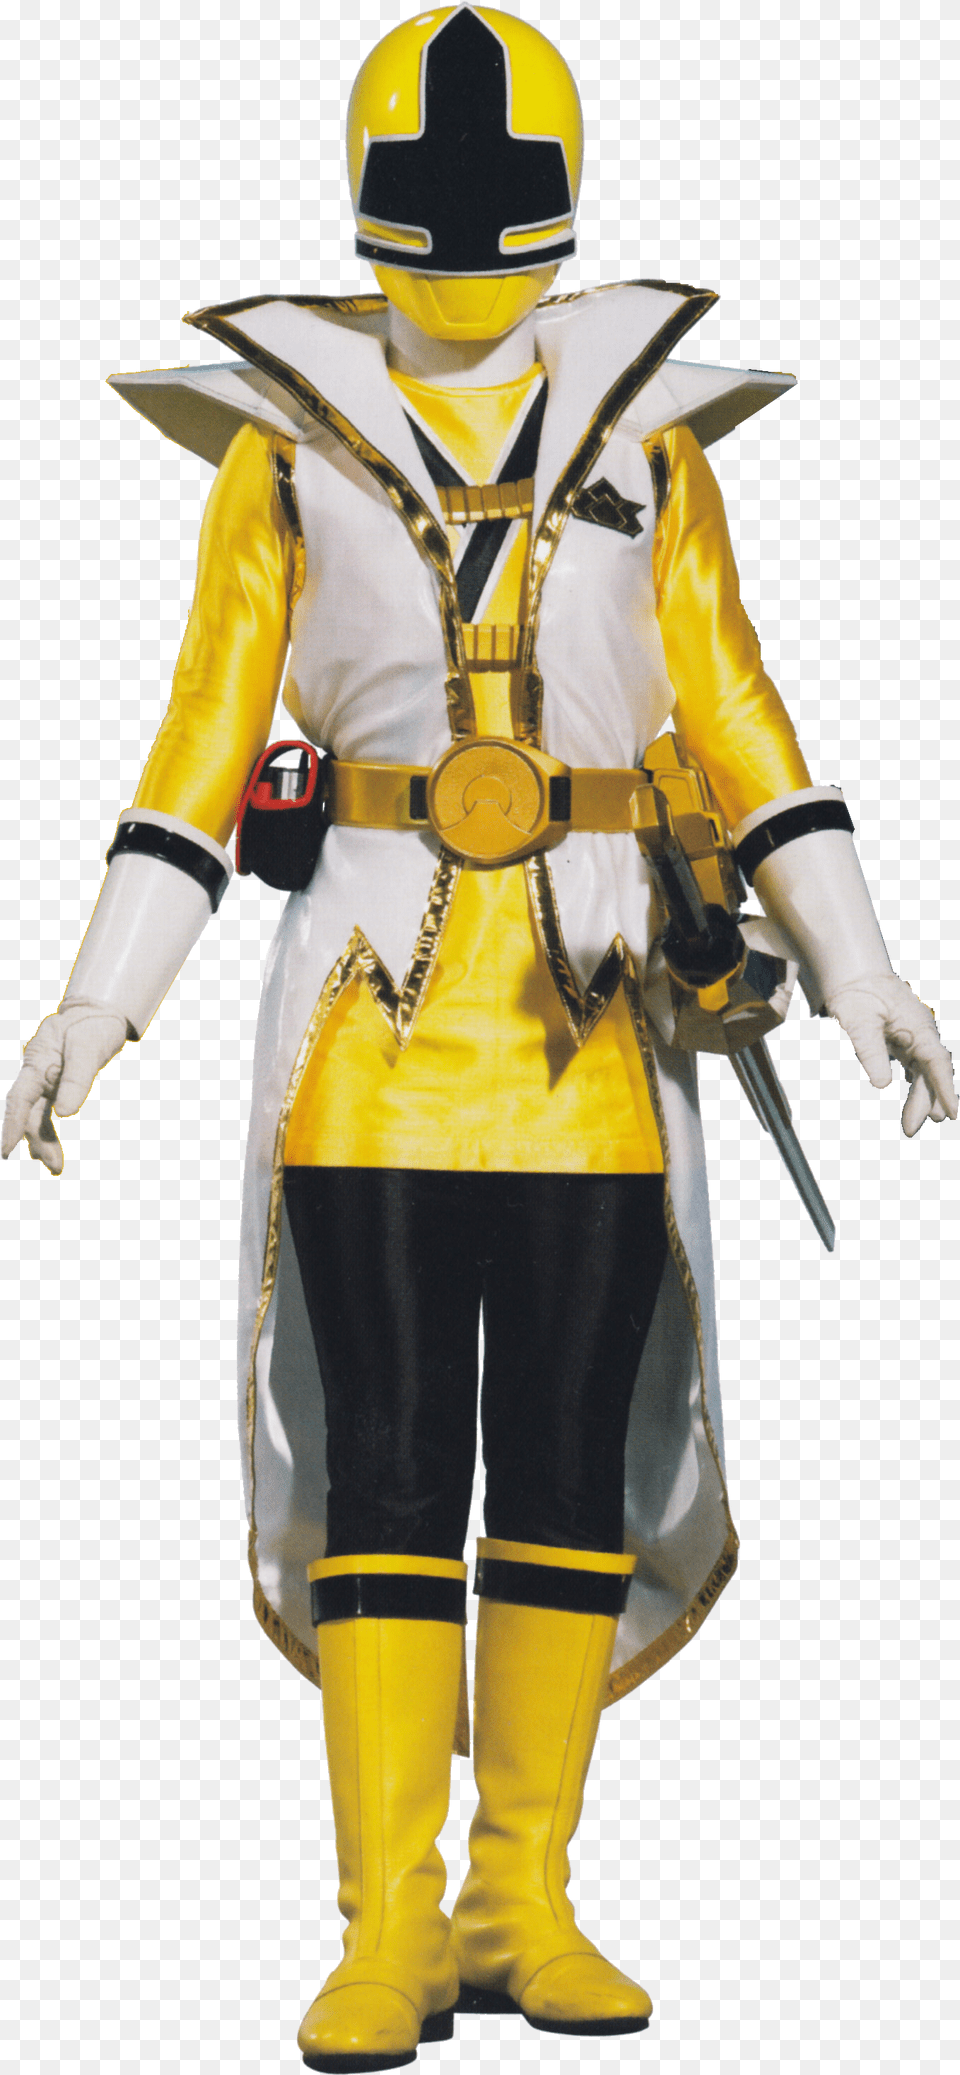 Power Rangers Super Samurai Yellow Ranger, Clothing, Costume, Person, Adult Png